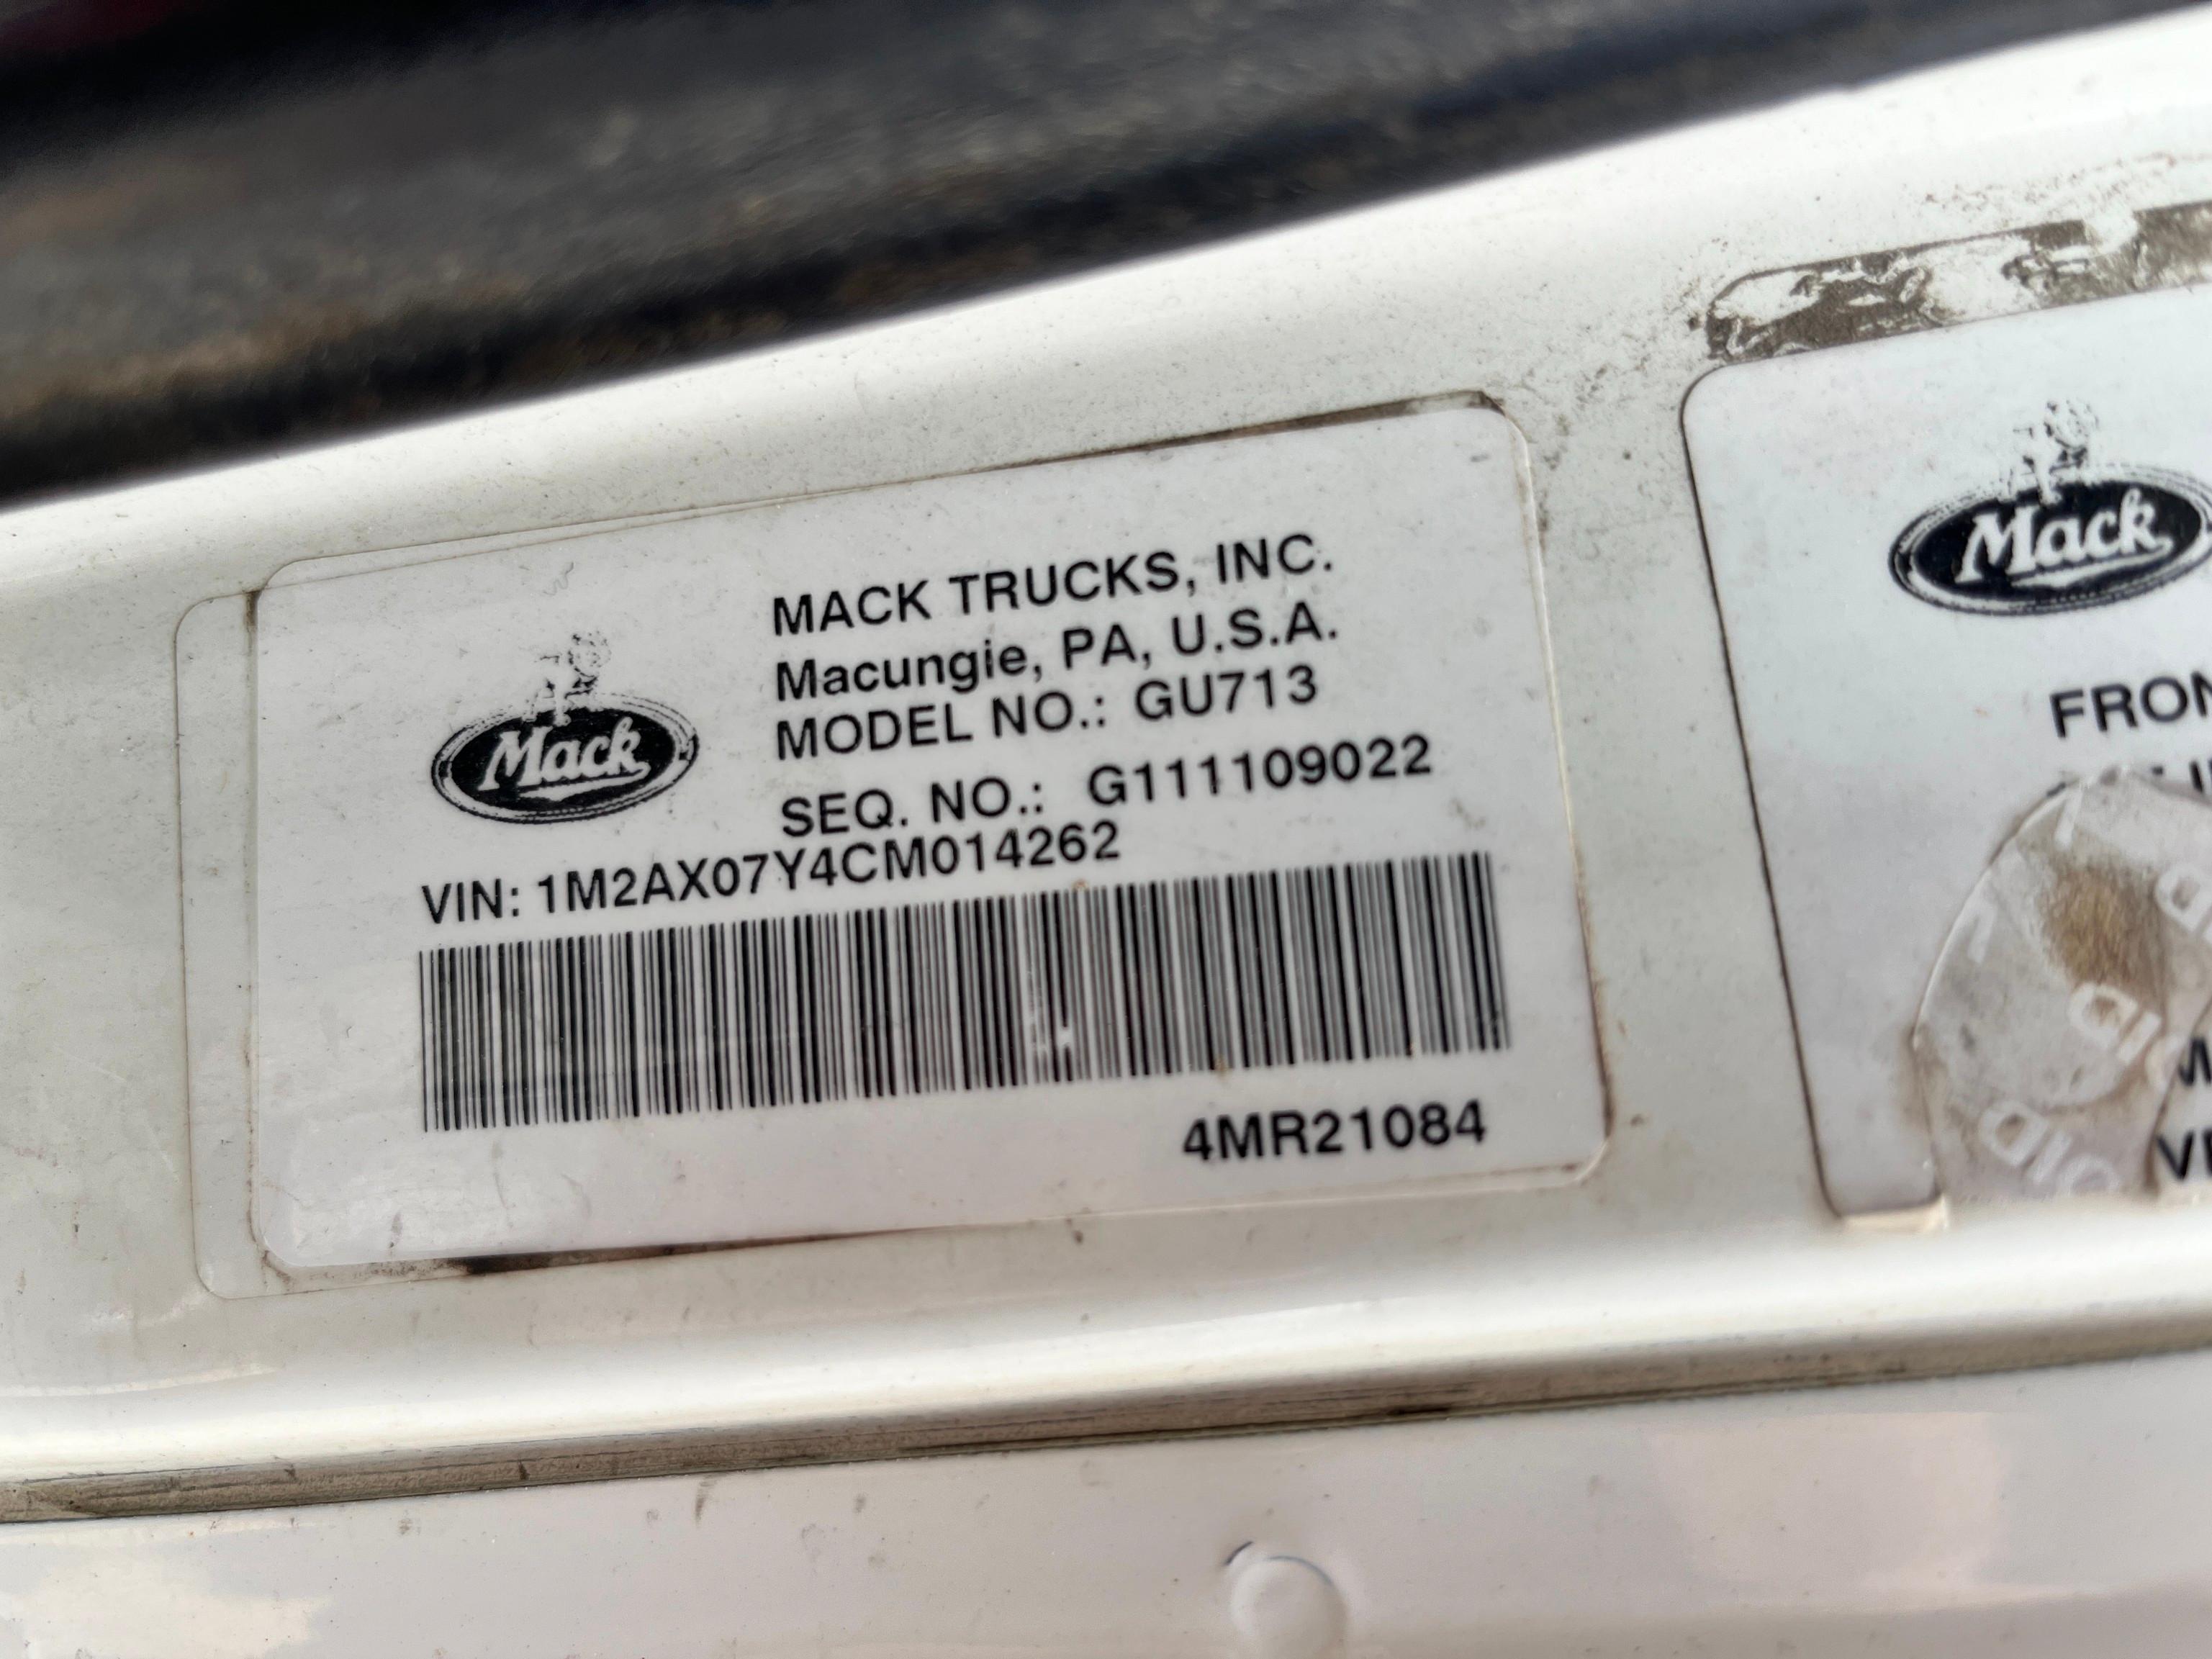 2012 MACK GU713 TRUCK TRACTOR VN:1M2AX07Y4CM014262 powered by Mack MP8-505C diesel engine, equipped